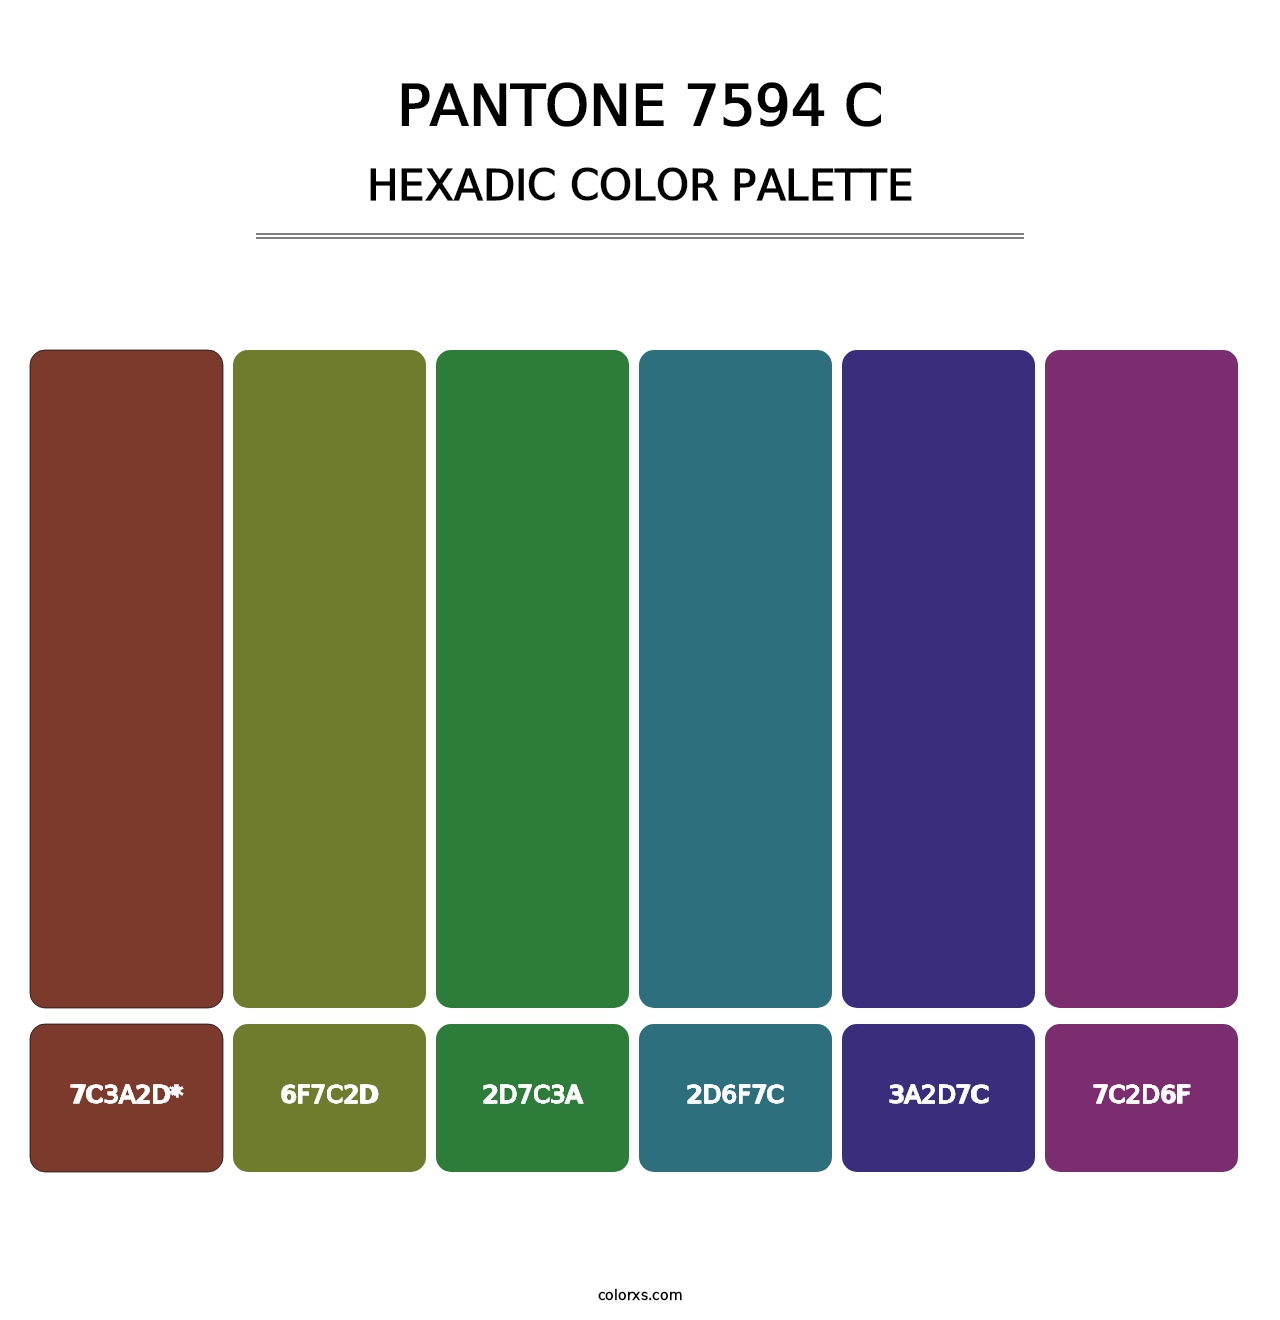 PANTONE 7594 C - Hexadic Color Palette